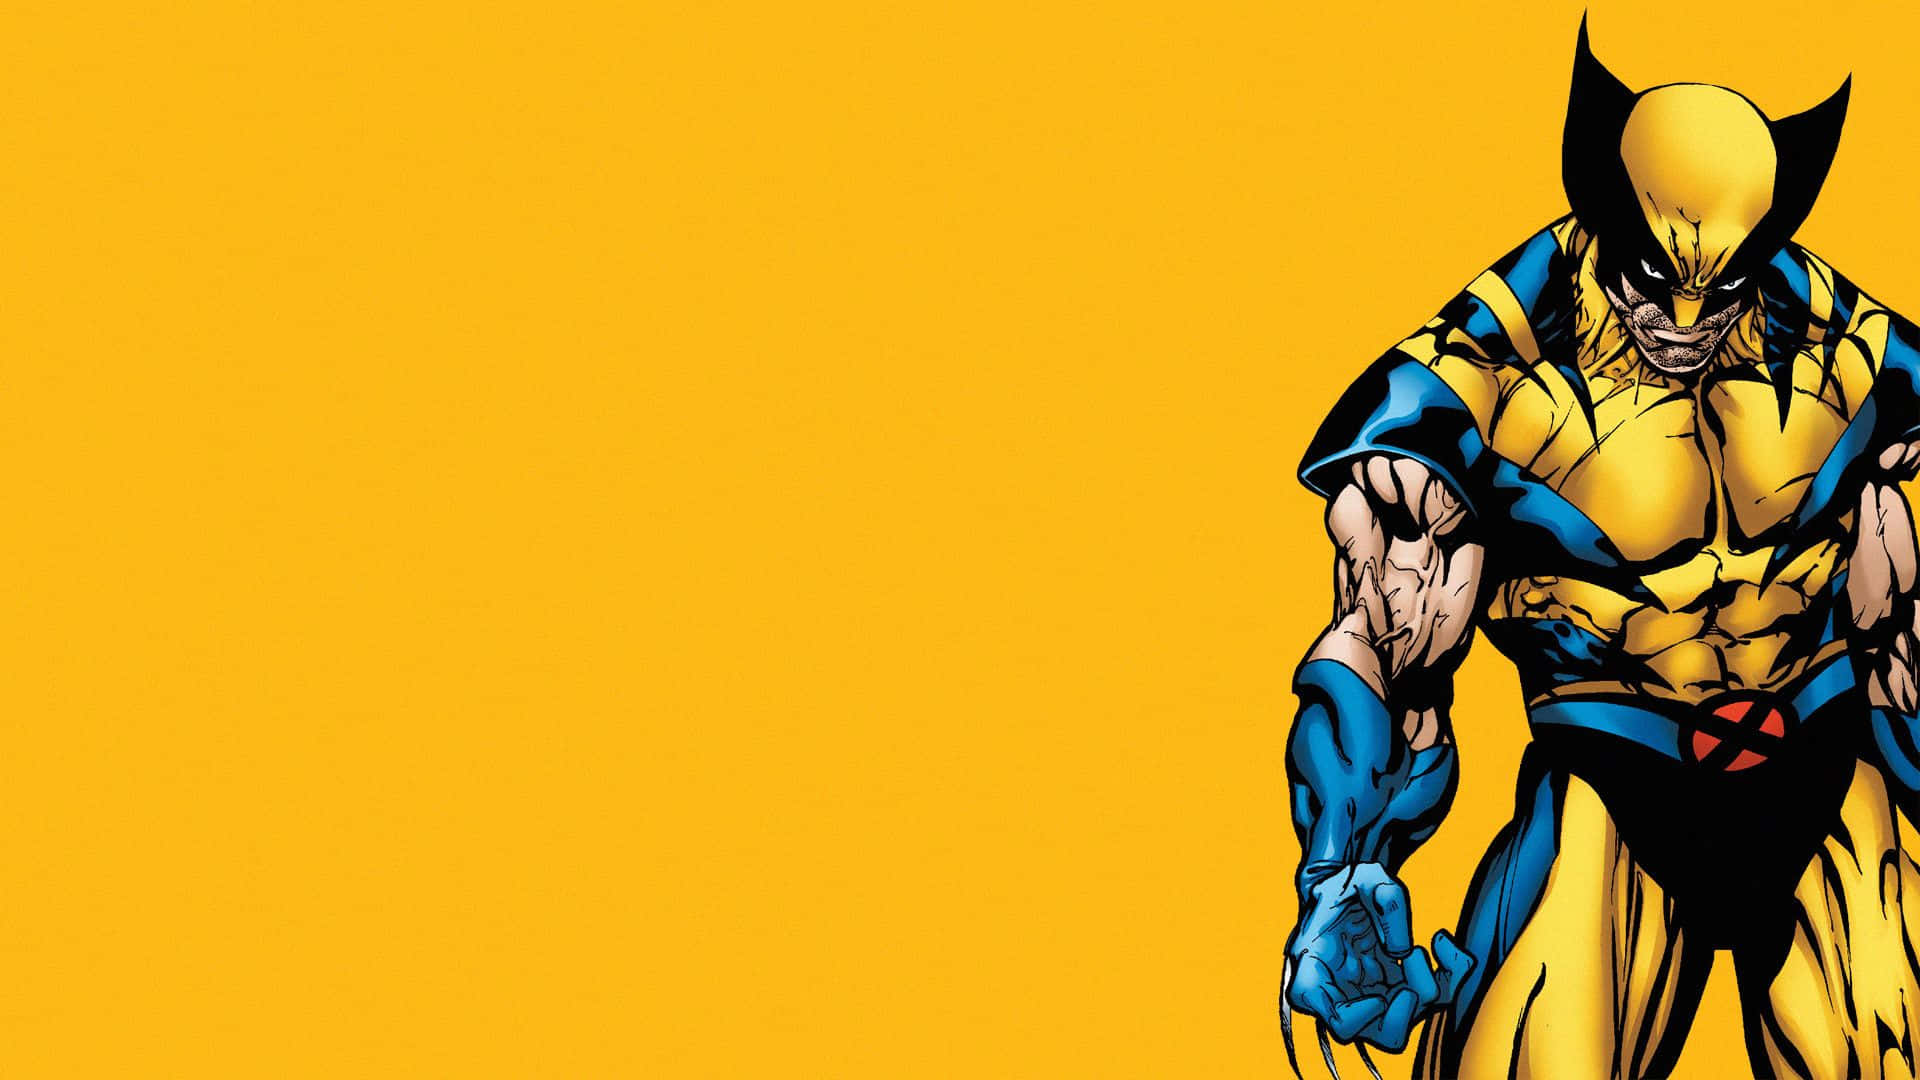 Wolverine, the X-Men superhero